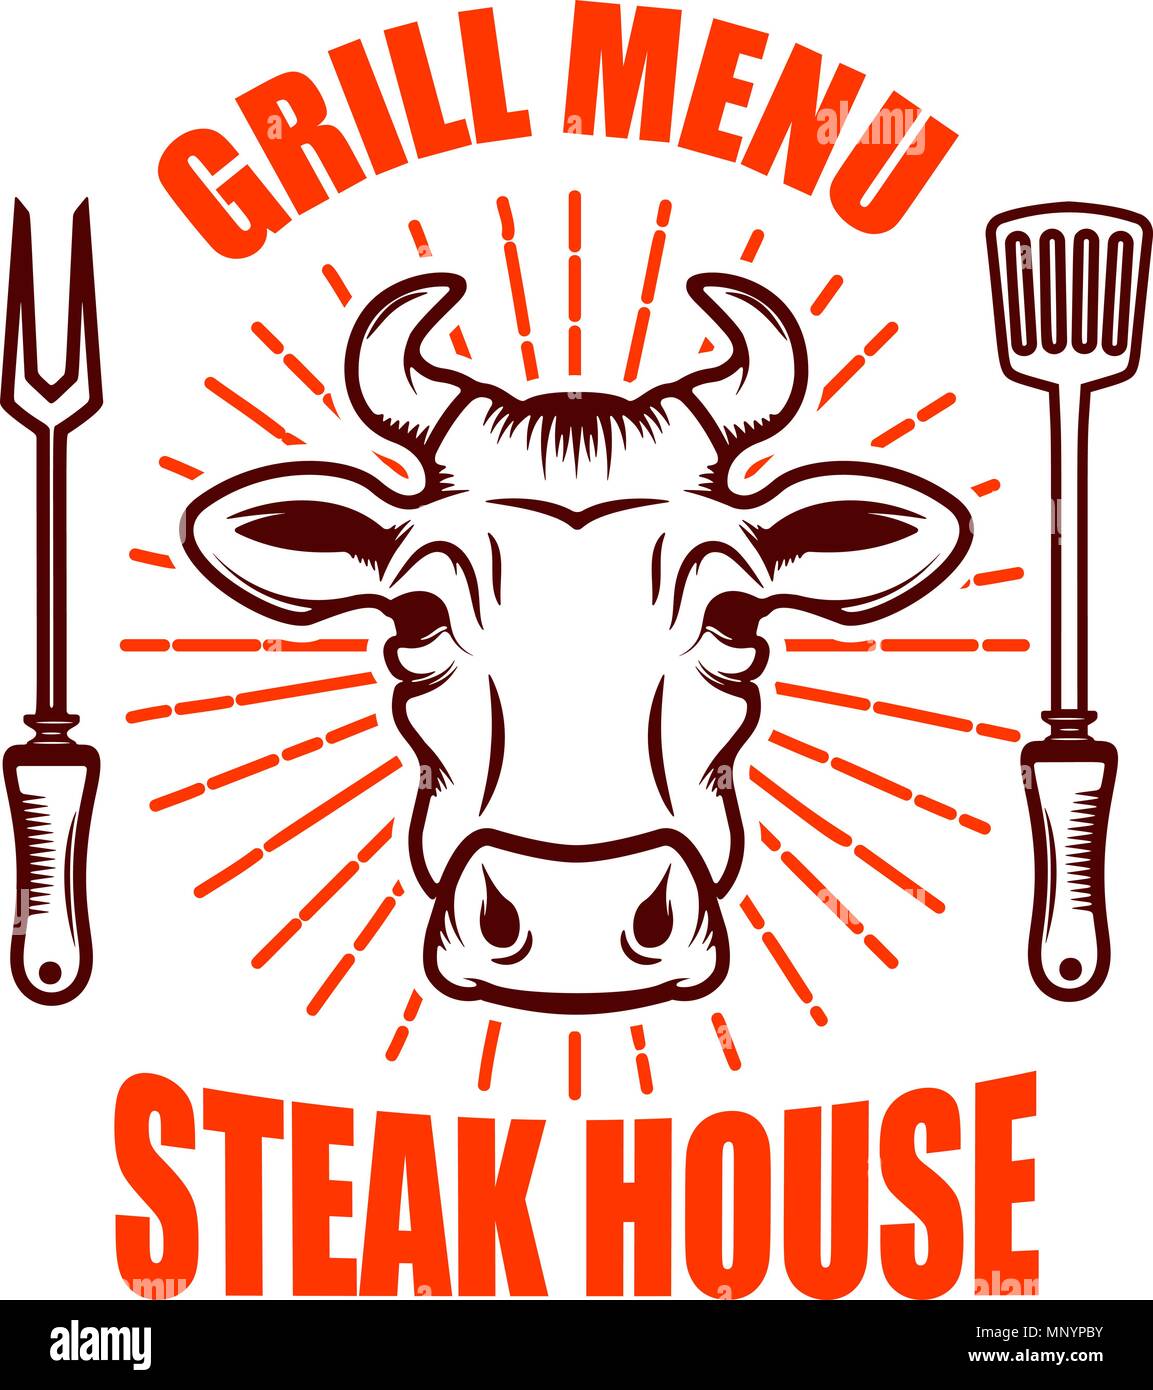 Steak house. Bull head  and crossed kitchen knives. Design element for logo, label, emblem. Vector illustration Stock Vector